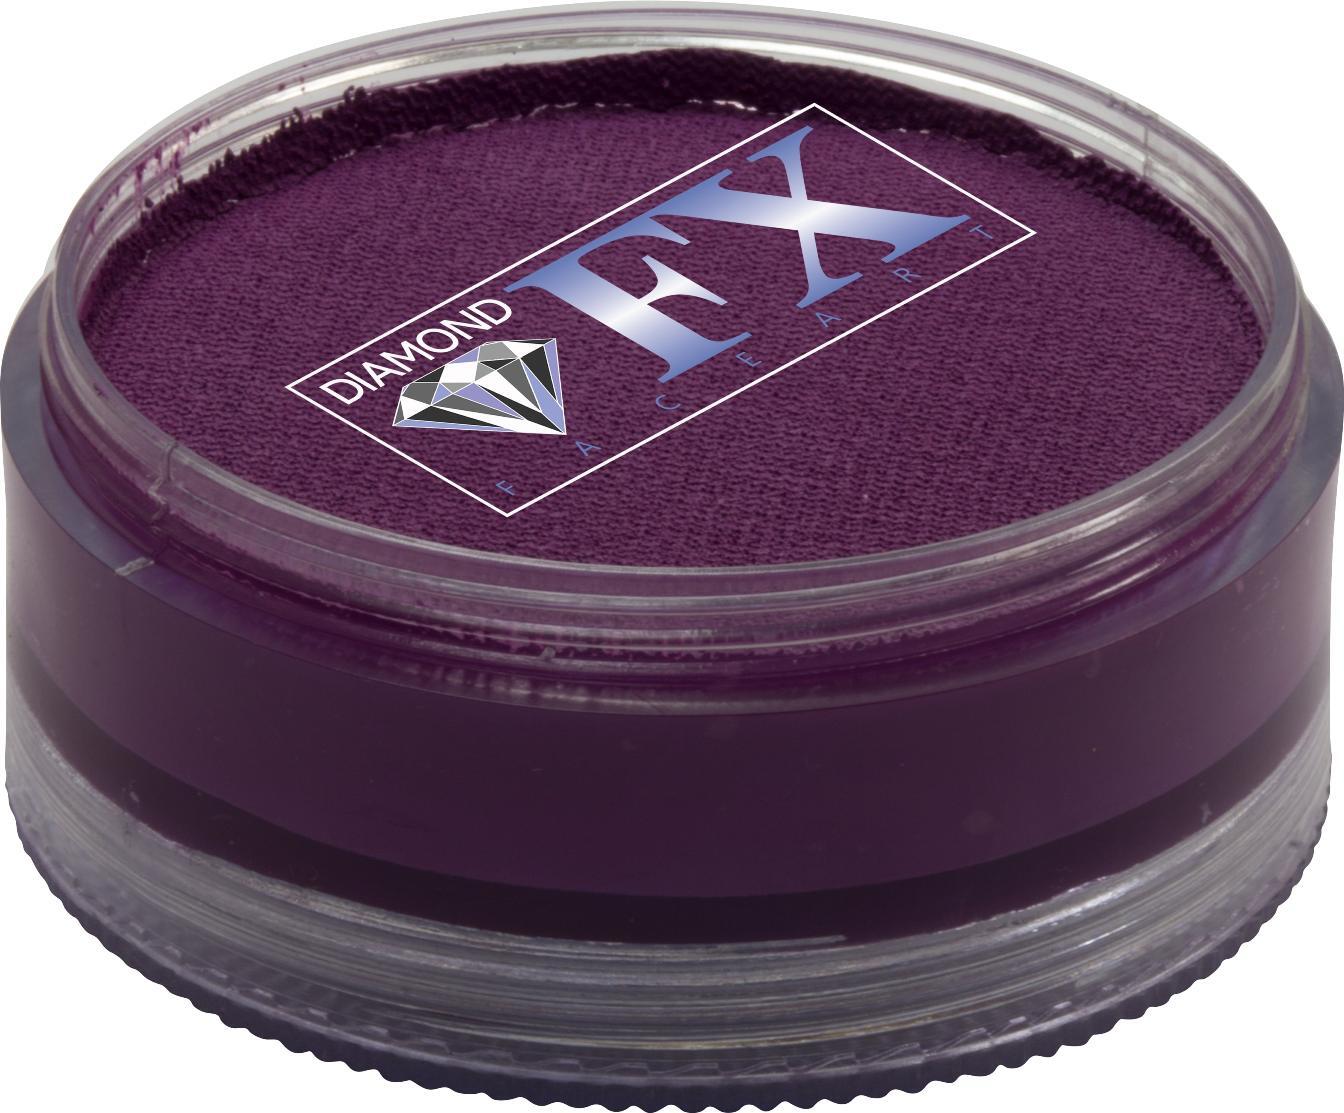 Diamond FX Purple 90g - Small Image